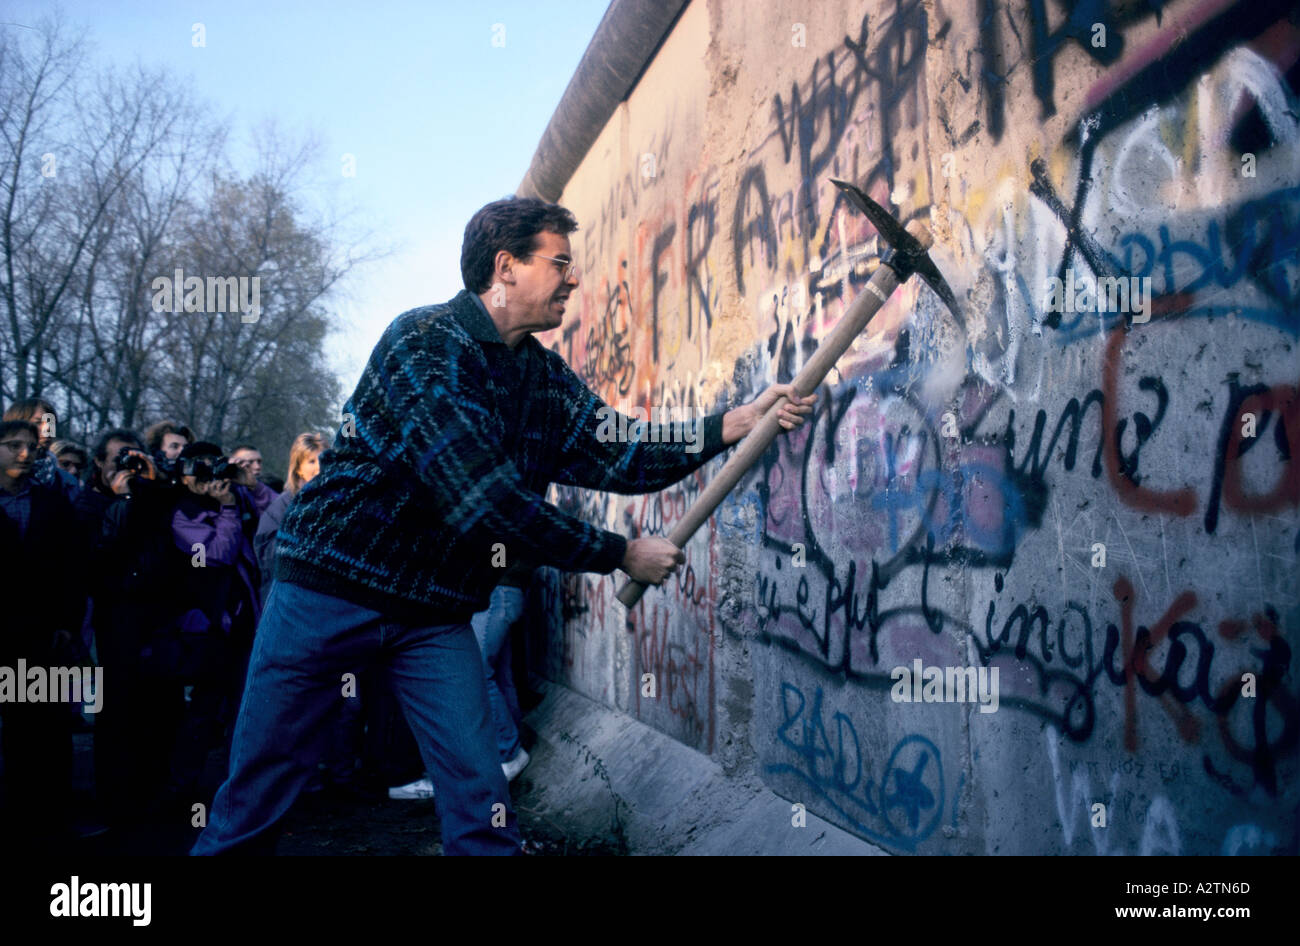 fall of berlin wall november 1989 Stock Photo